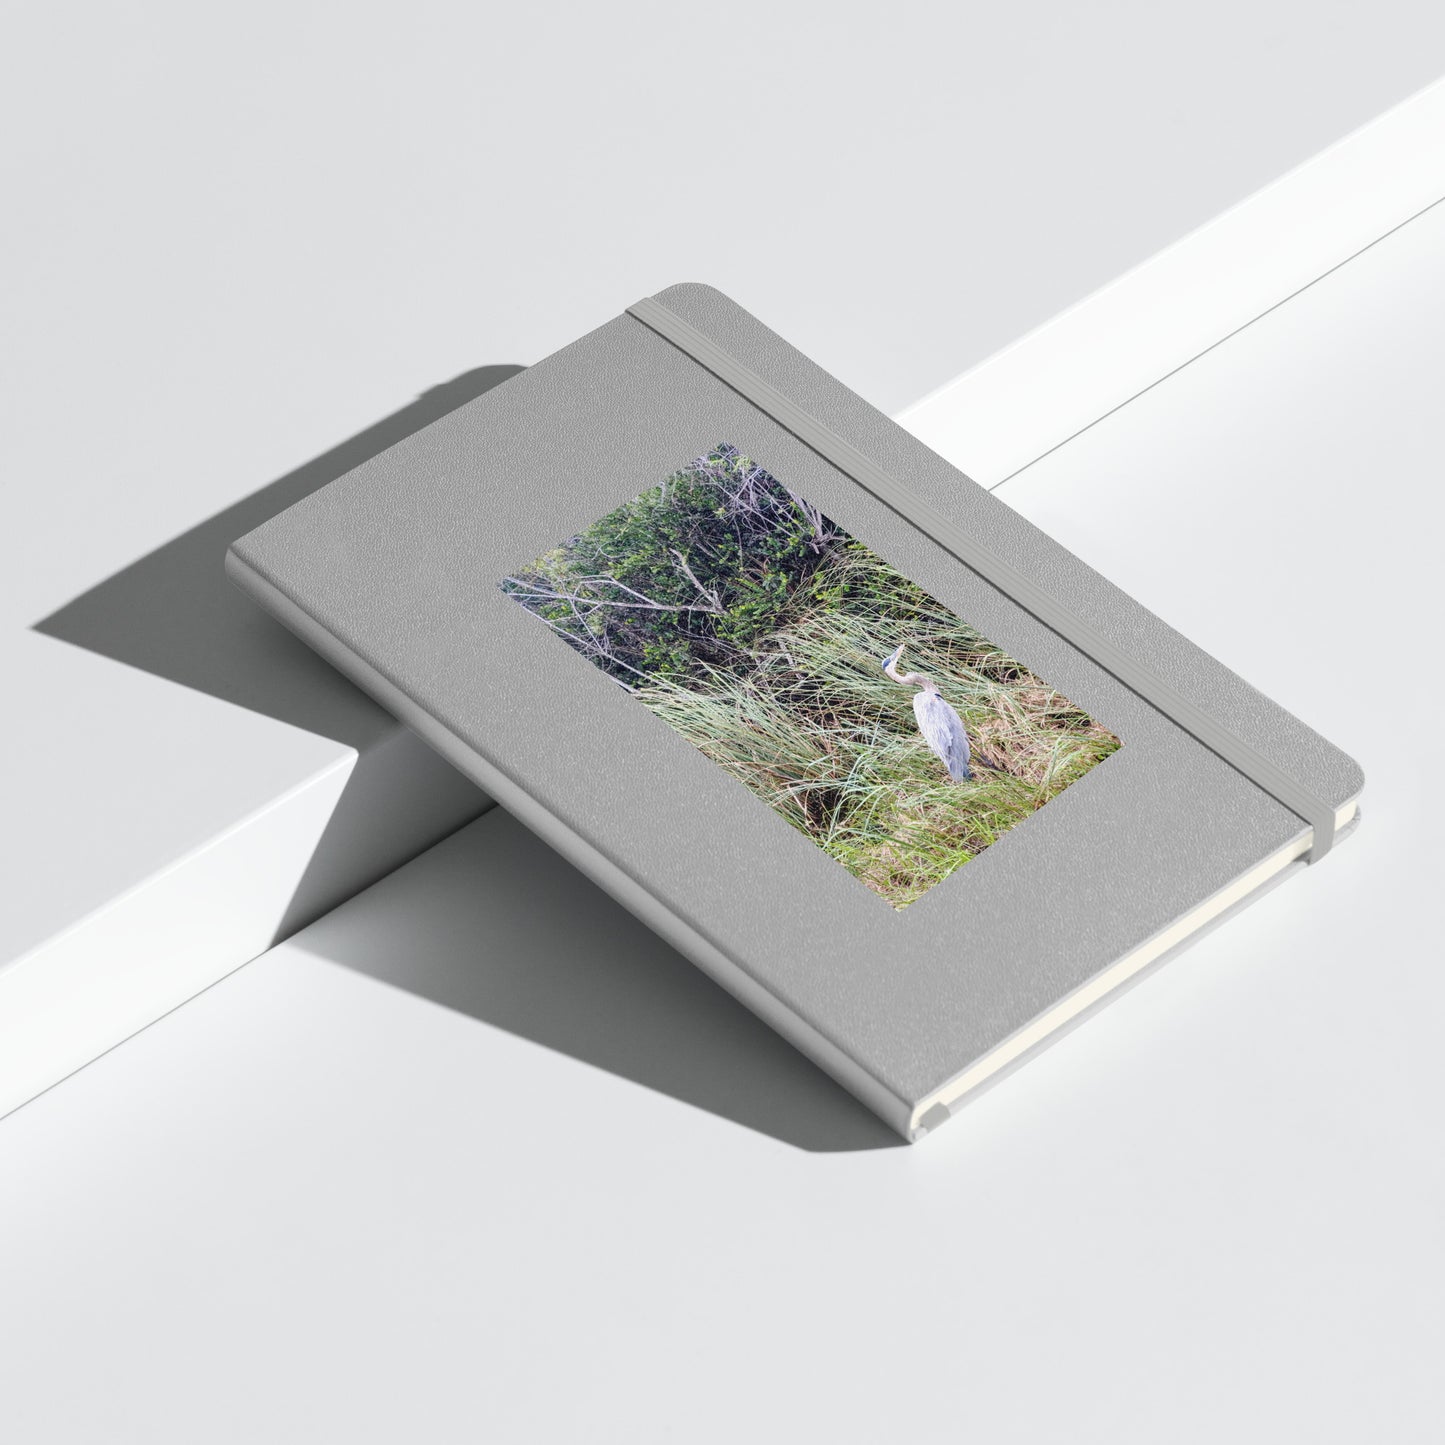 Everglades Heron Hardcover bound notebook